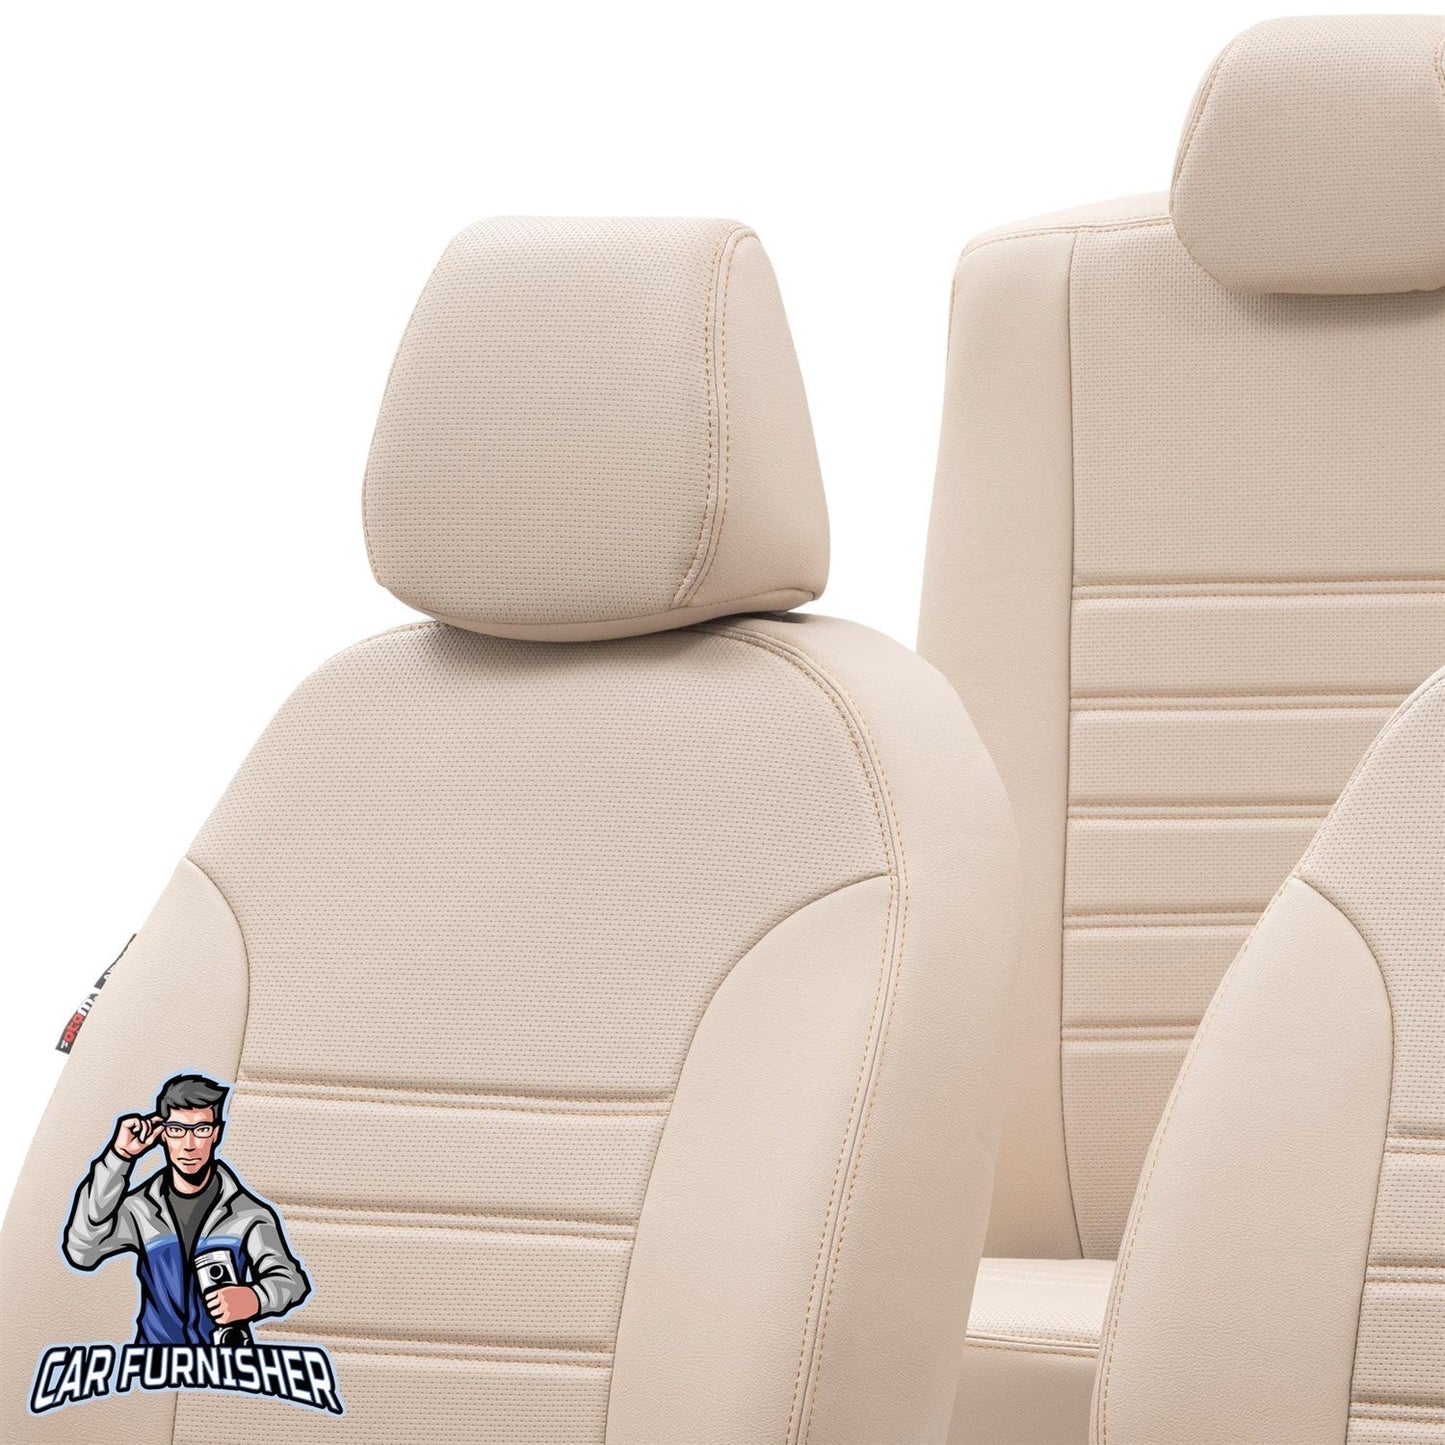 Isuzu L35 Seat Cover New York Leather Design Beige Leather